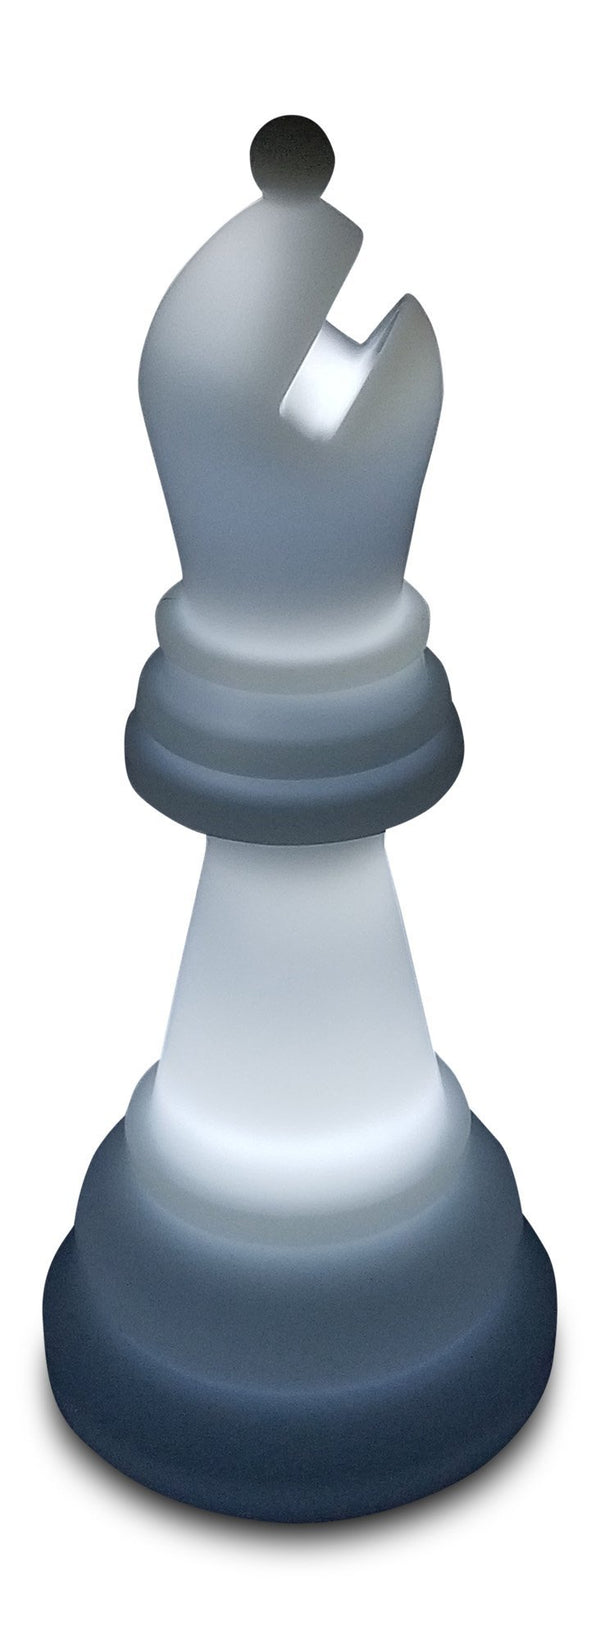 MegaChess 20 Inch Perfect Bishop Light-Up Giant Chess Piece - White |  | MegaChess.com